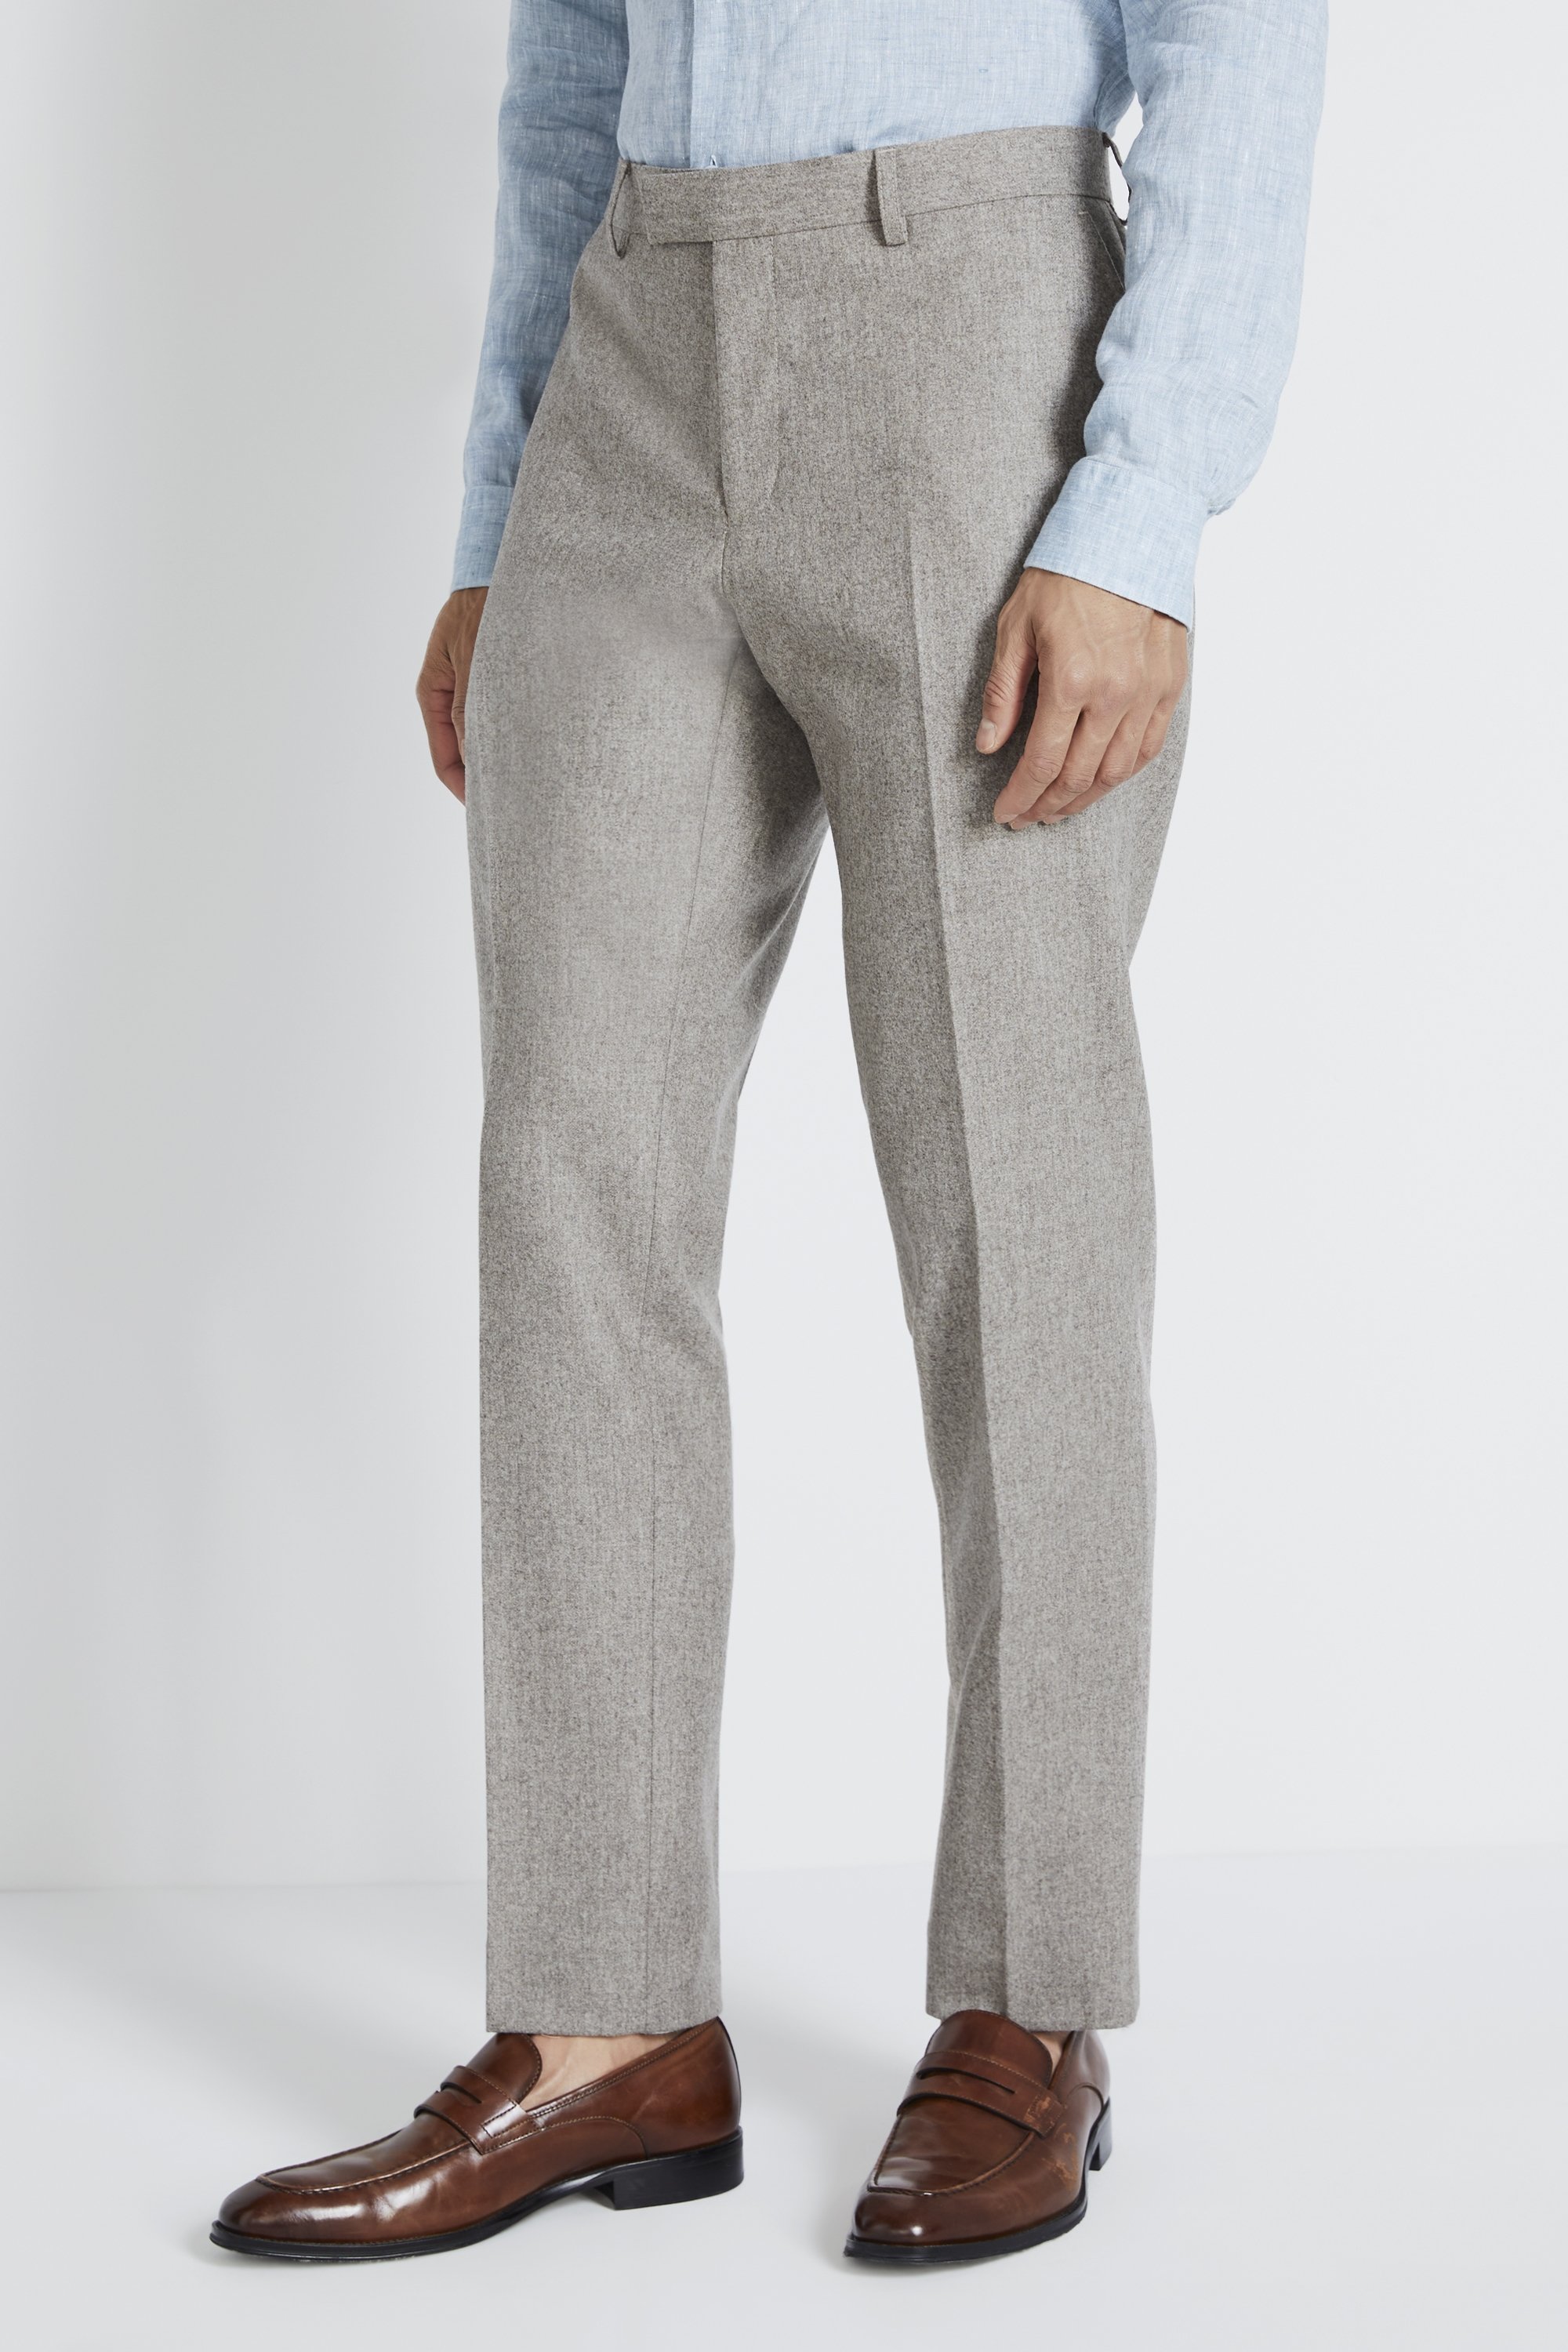 Buy Premium Merino Wool Pants For Men Online In India